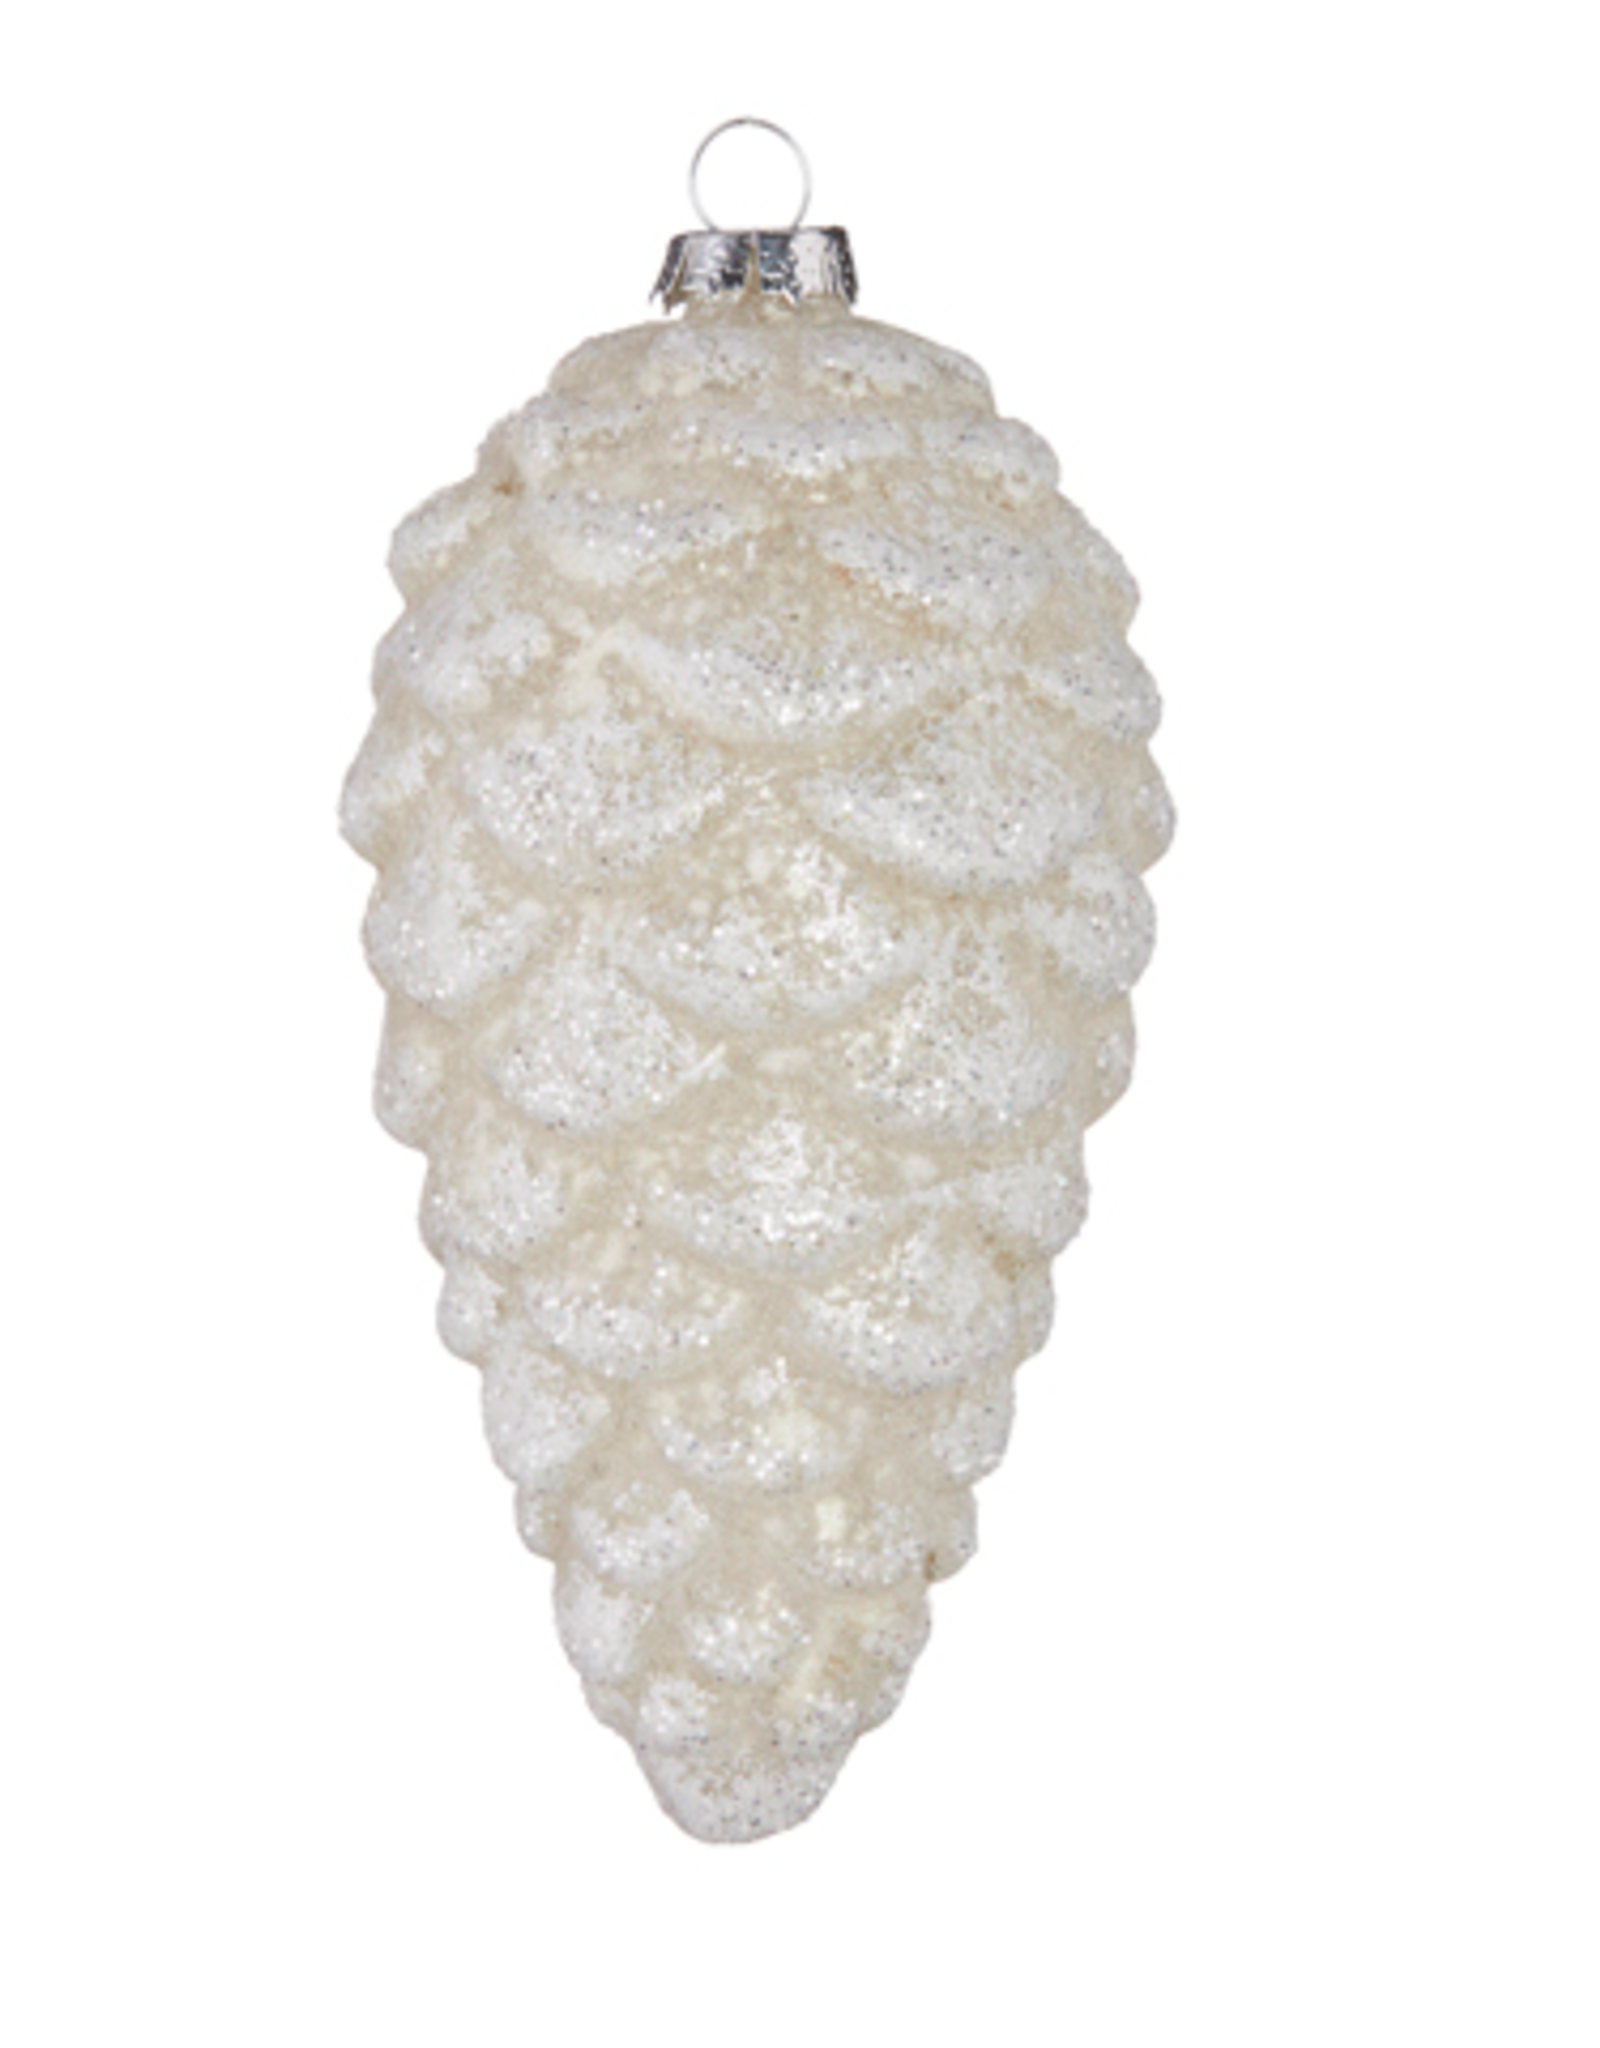 Glittered White Pinecone Ornament - 5.75"